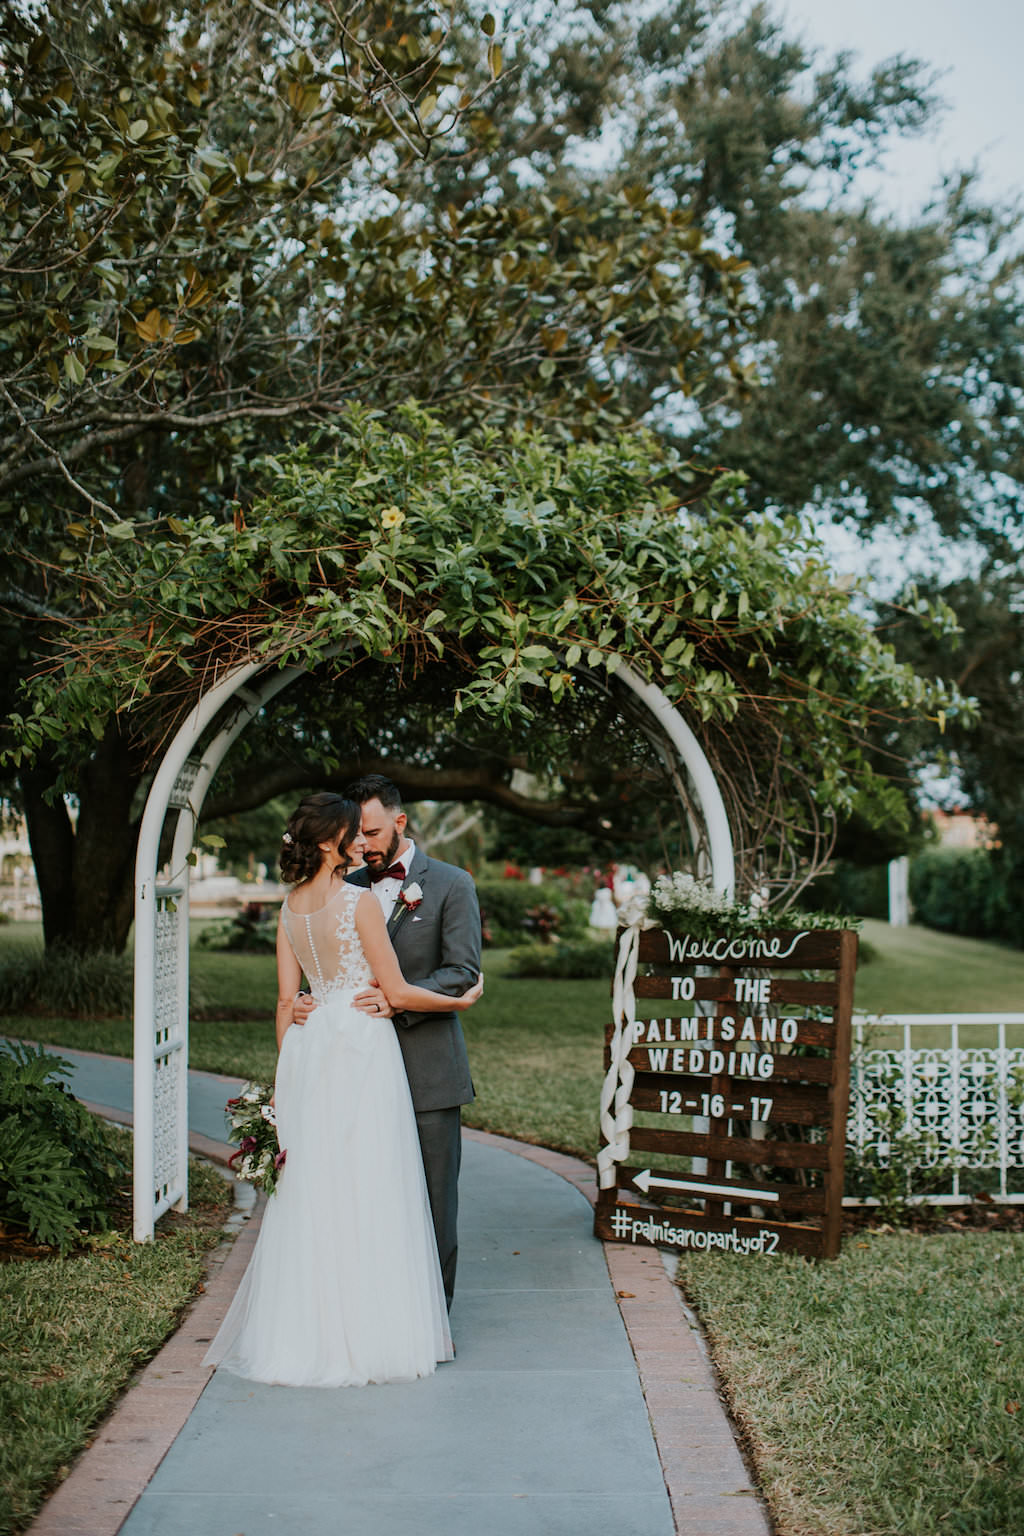 Outdoor Bride and Groom Wedding Portrait. White Arch and Rustic Wooden Crate Sign | Tampa Bay Wedding Venue Davis Islands Garden Club